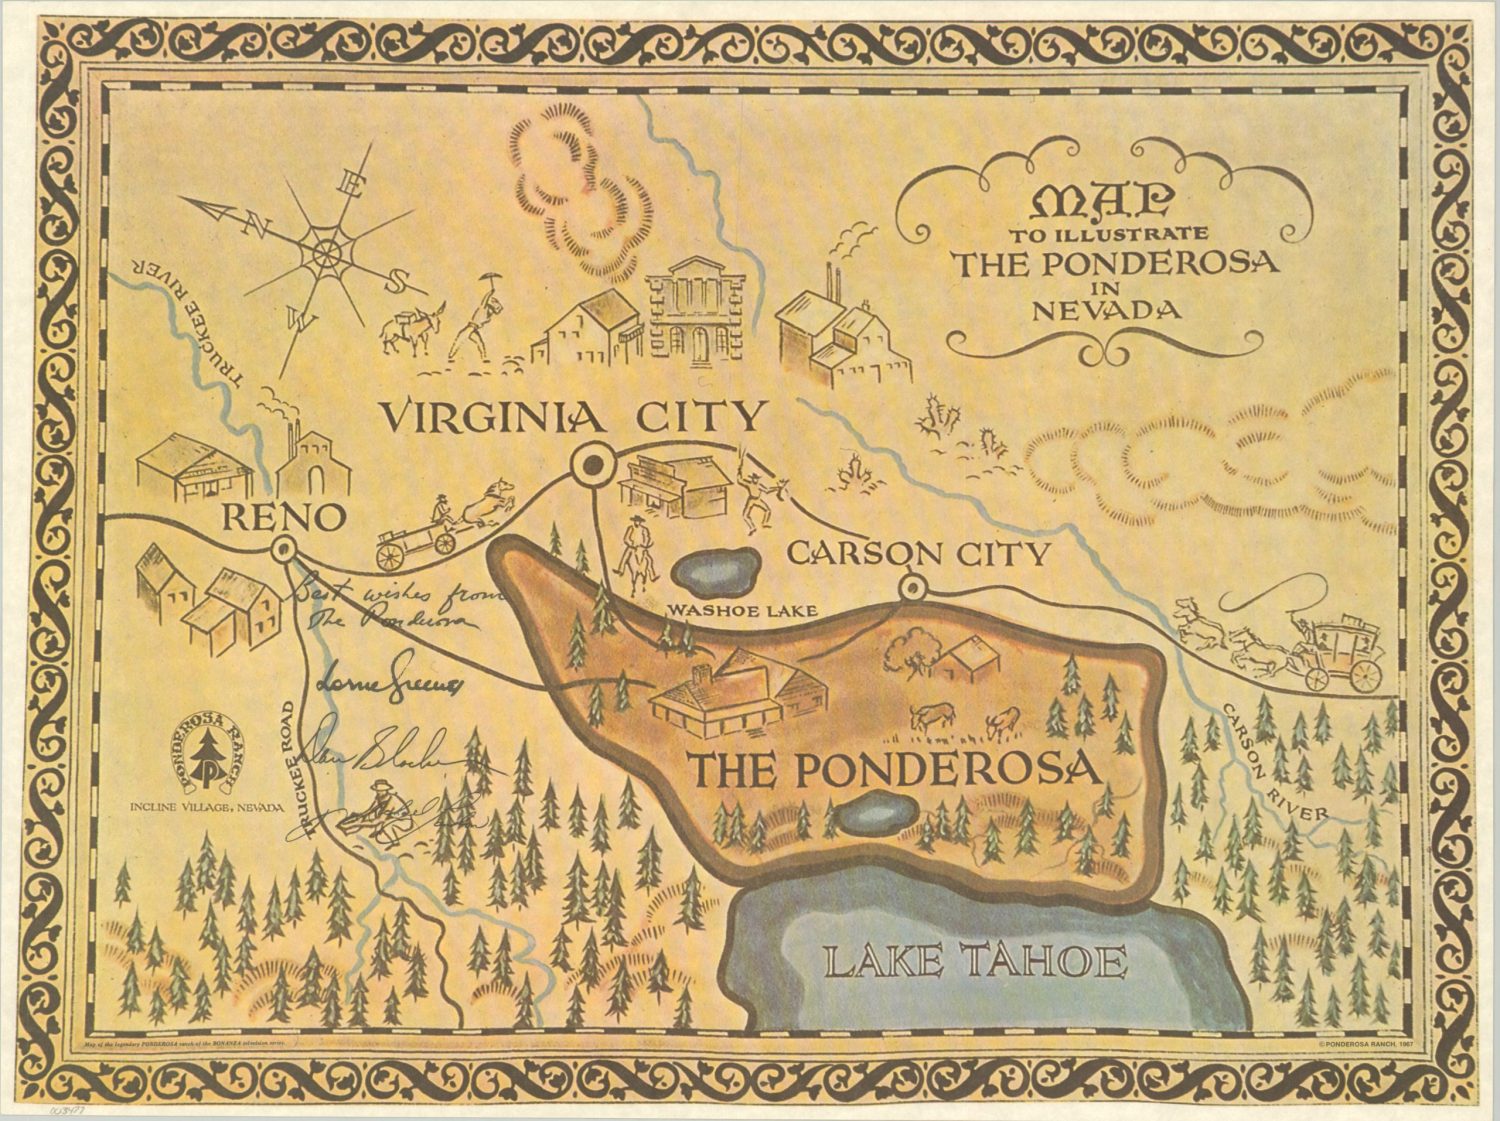 MAP TO ILLUSTRATE THE PONDEROSA IN NEVADA